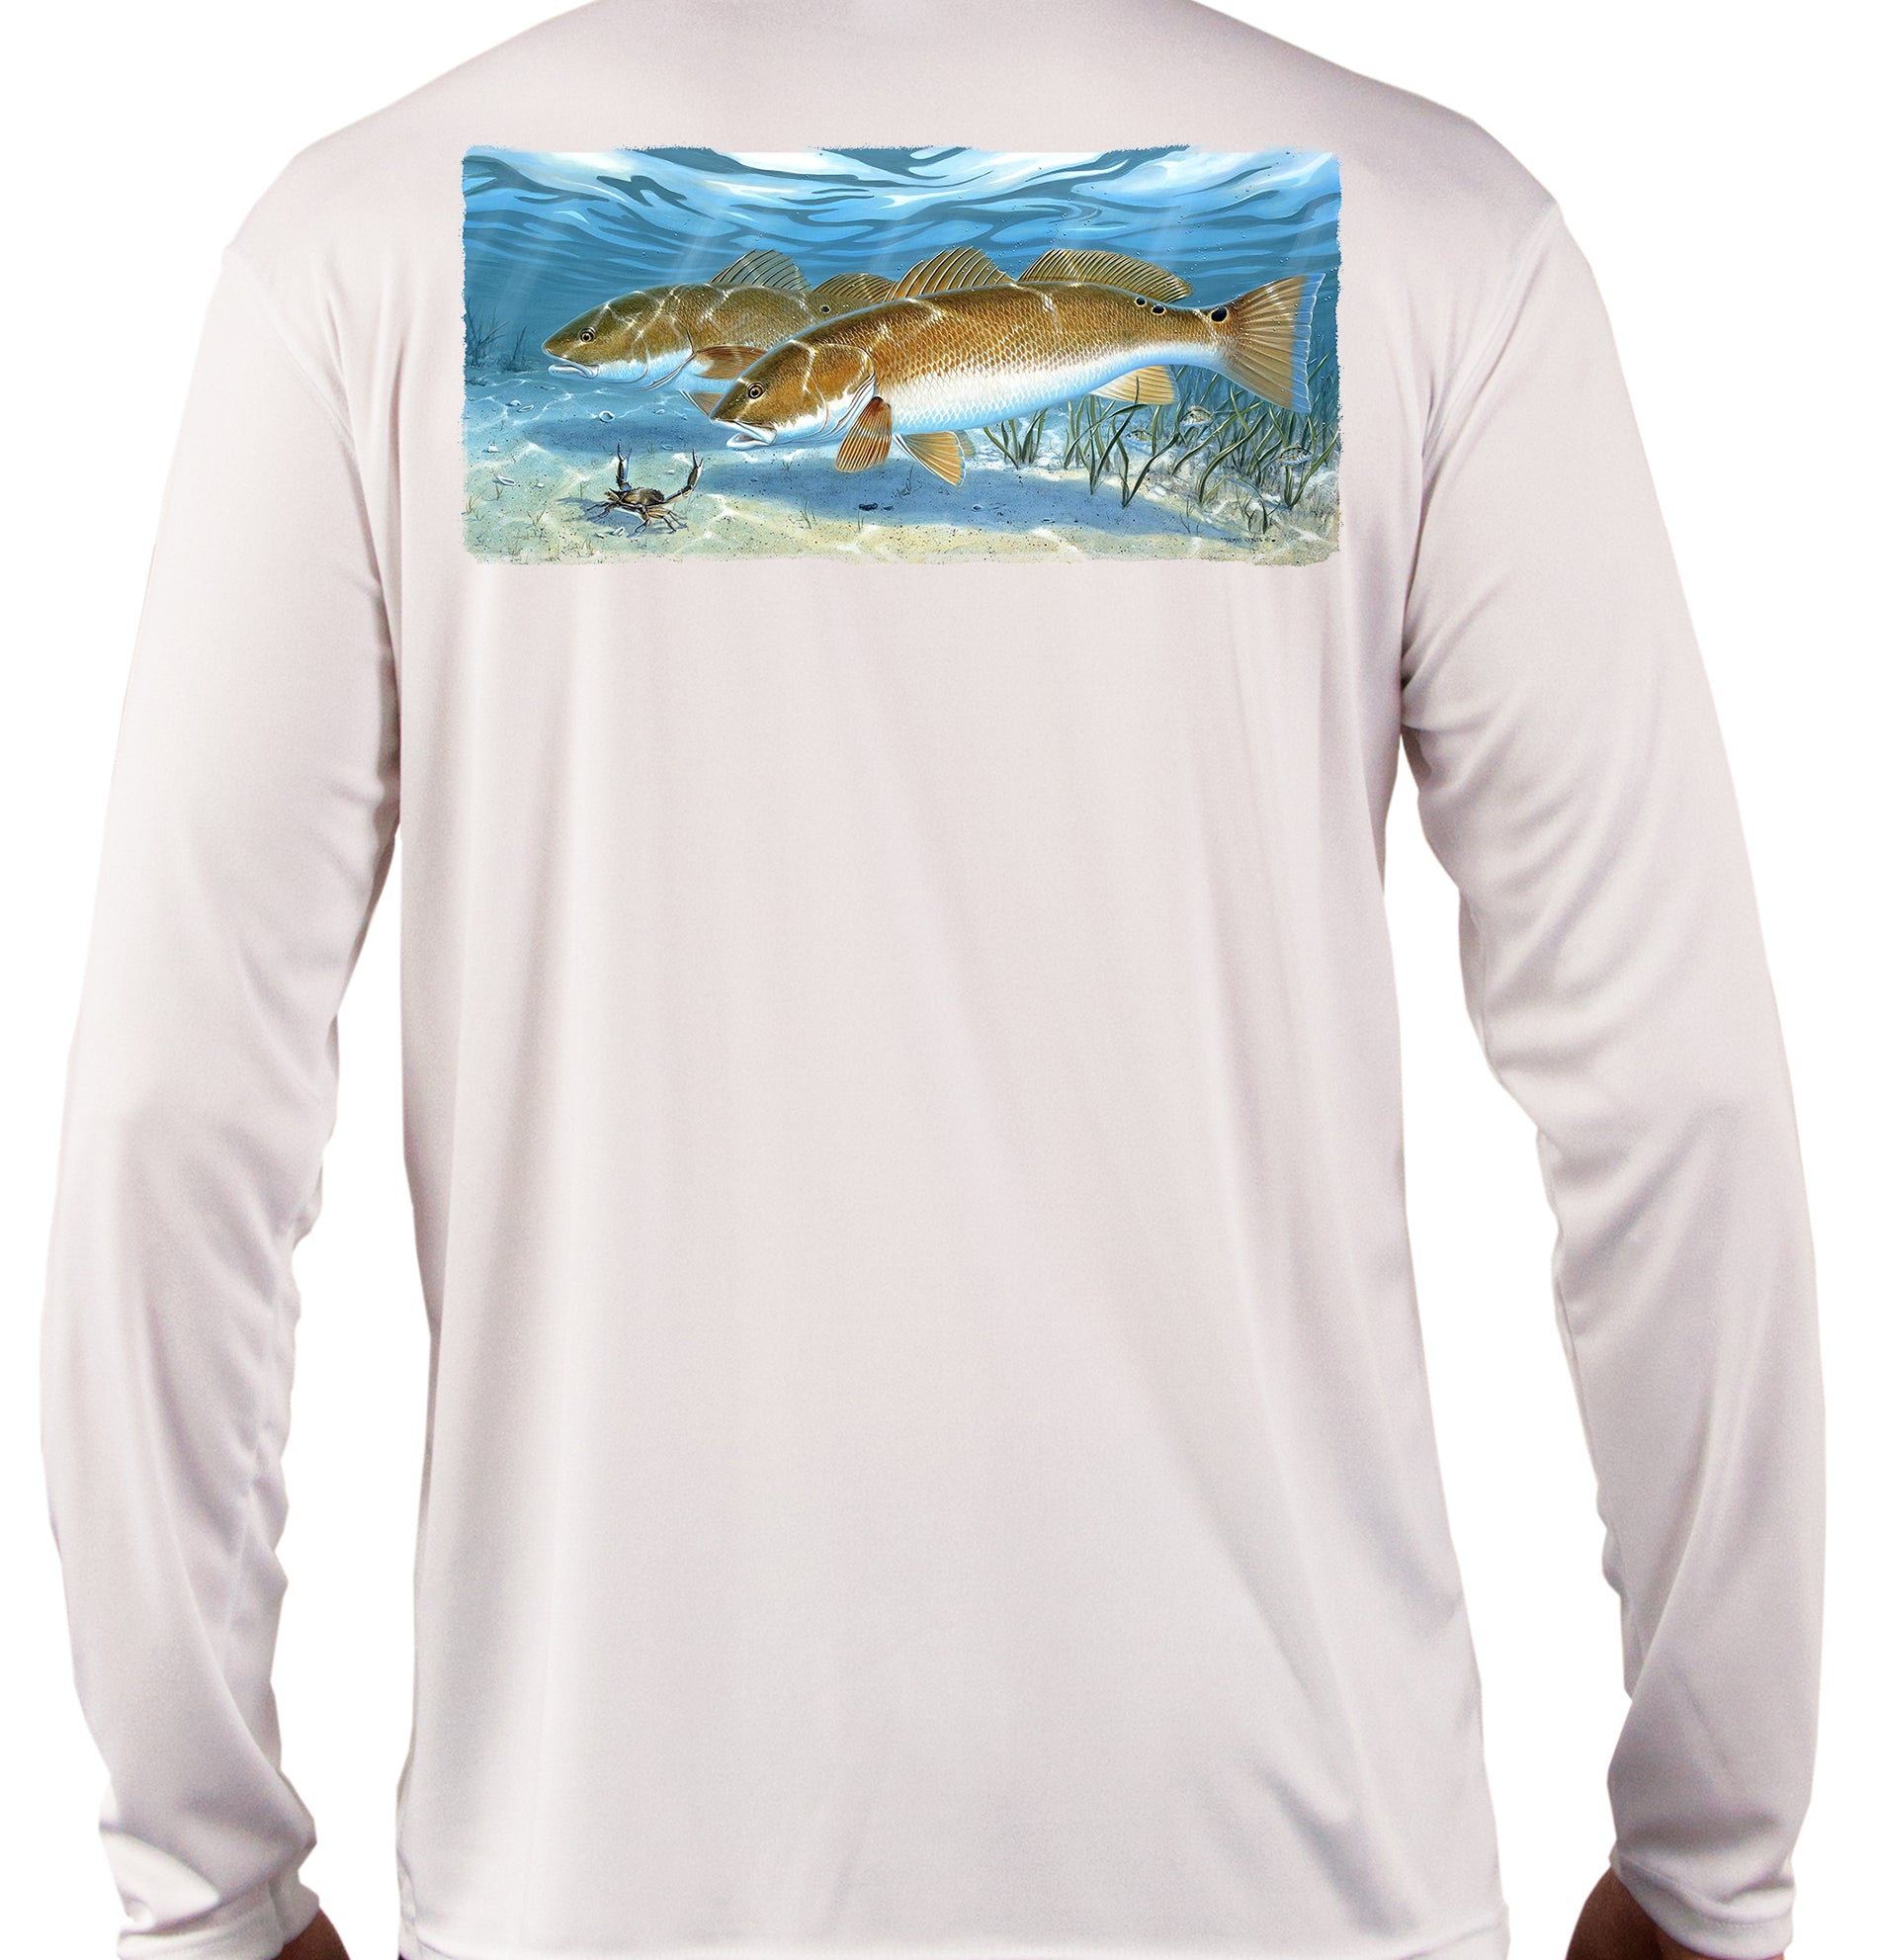 Redfish Hunting Blue Crab Fishing Shirts Men's Quick Dry Lightweight UPF 50+ Long Sleeve Shirts Rash Guard Swim Shirts Hiking Shirts Moisture Wicking